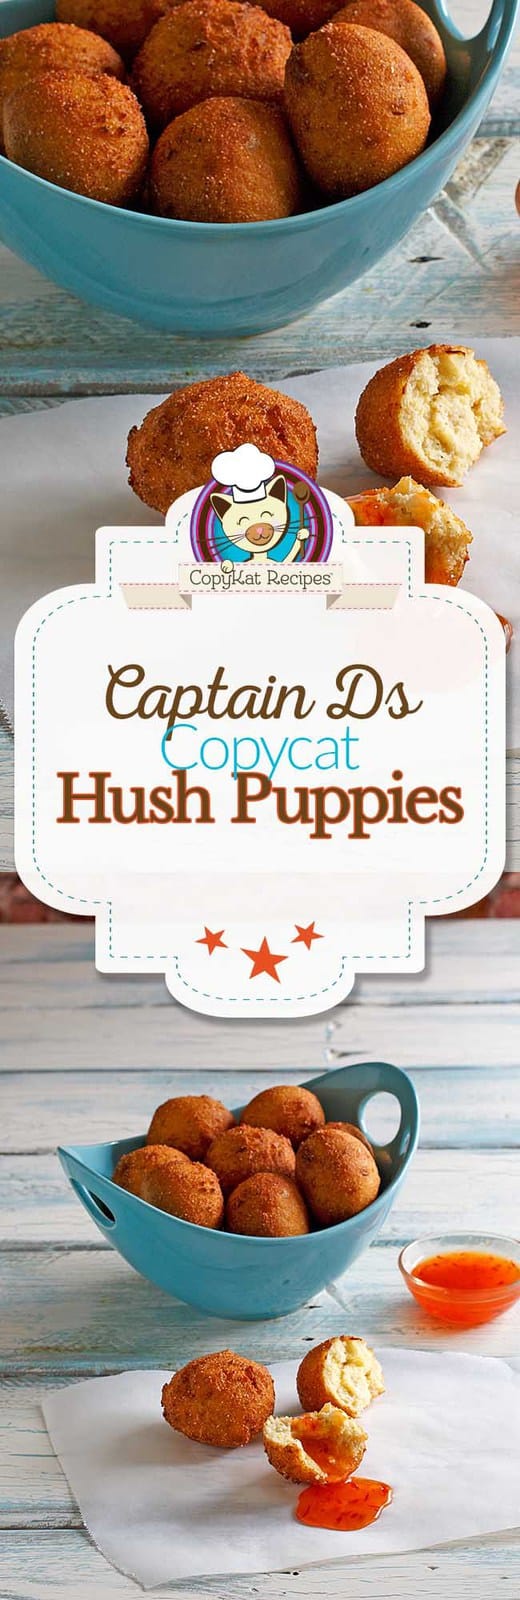 Captain Ds Hush Puppies